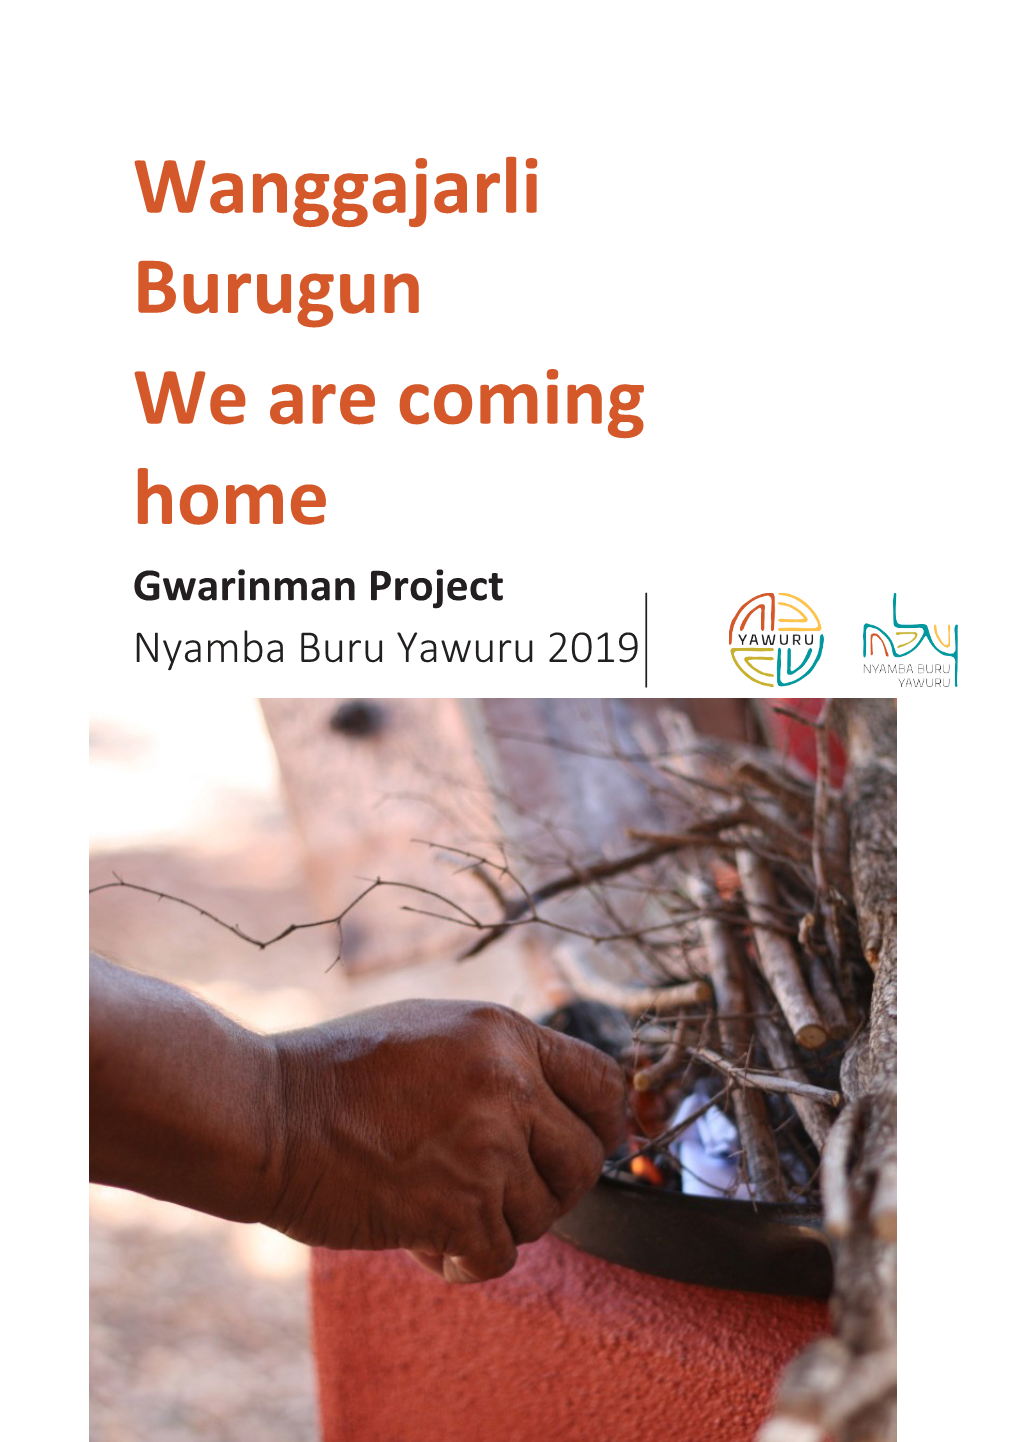 Nyamba Buru Yawuru's Gwarinman Project